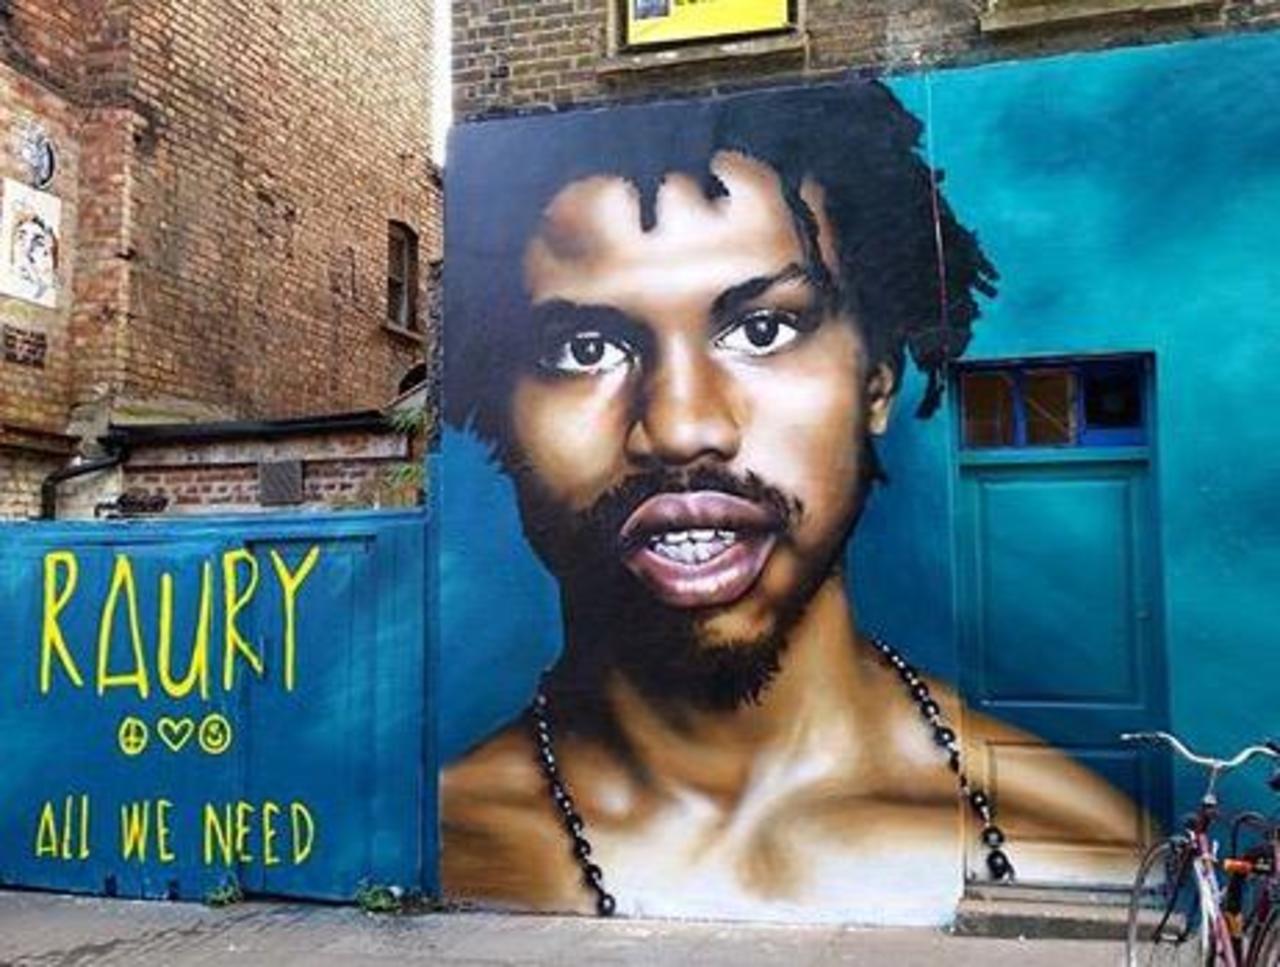 New Street Art of Raury by Olliver Switch in Brick Lane 

#art #graffiti #mural #streetart http://t.co/nSZq9Oz80Z